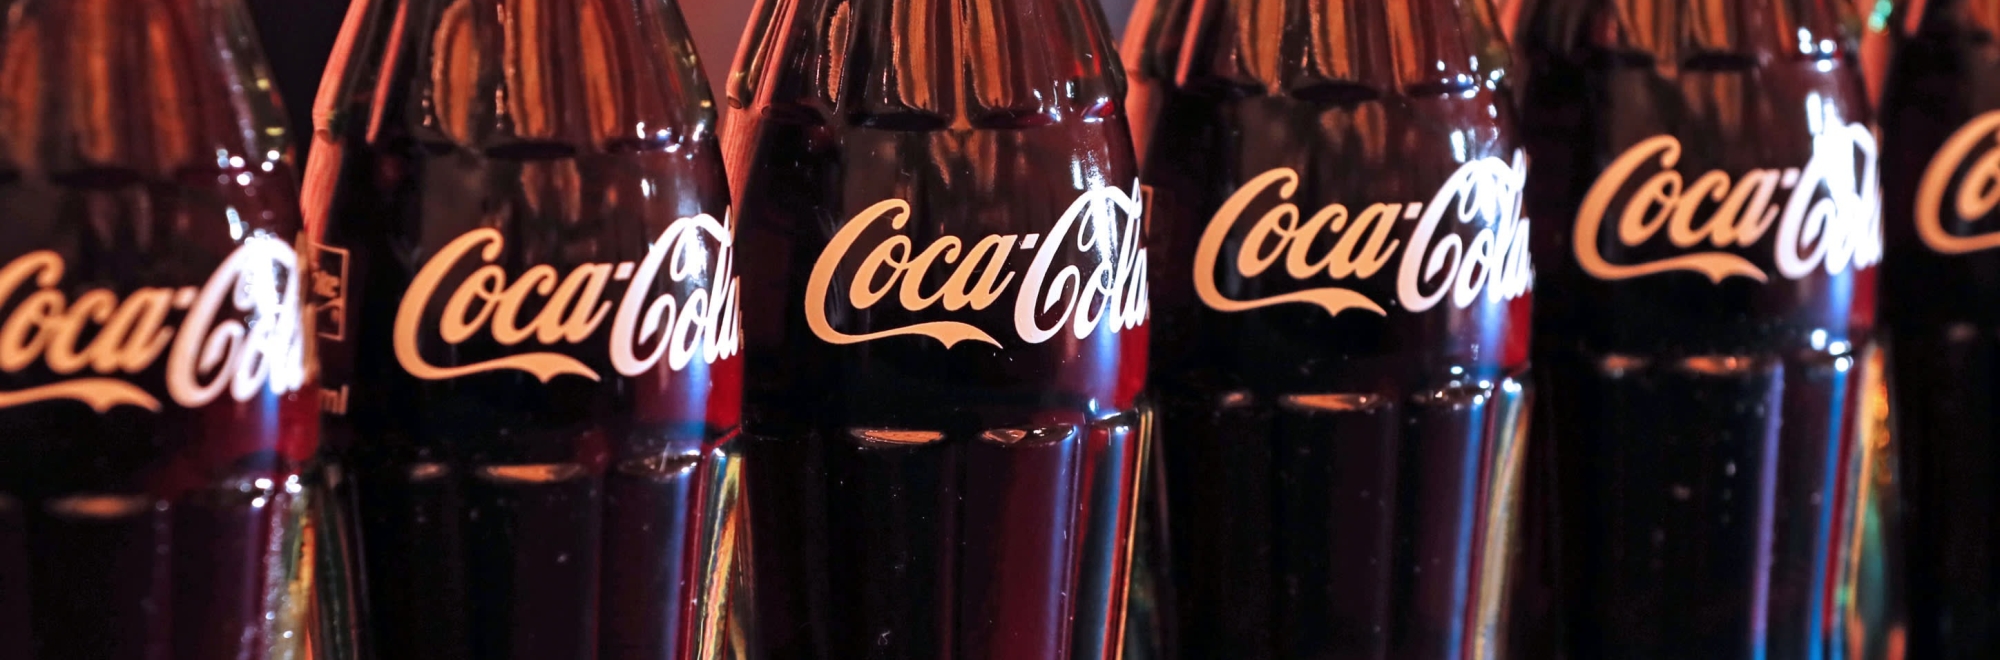 Coca-Cola's House Rules campaign fails the taste test